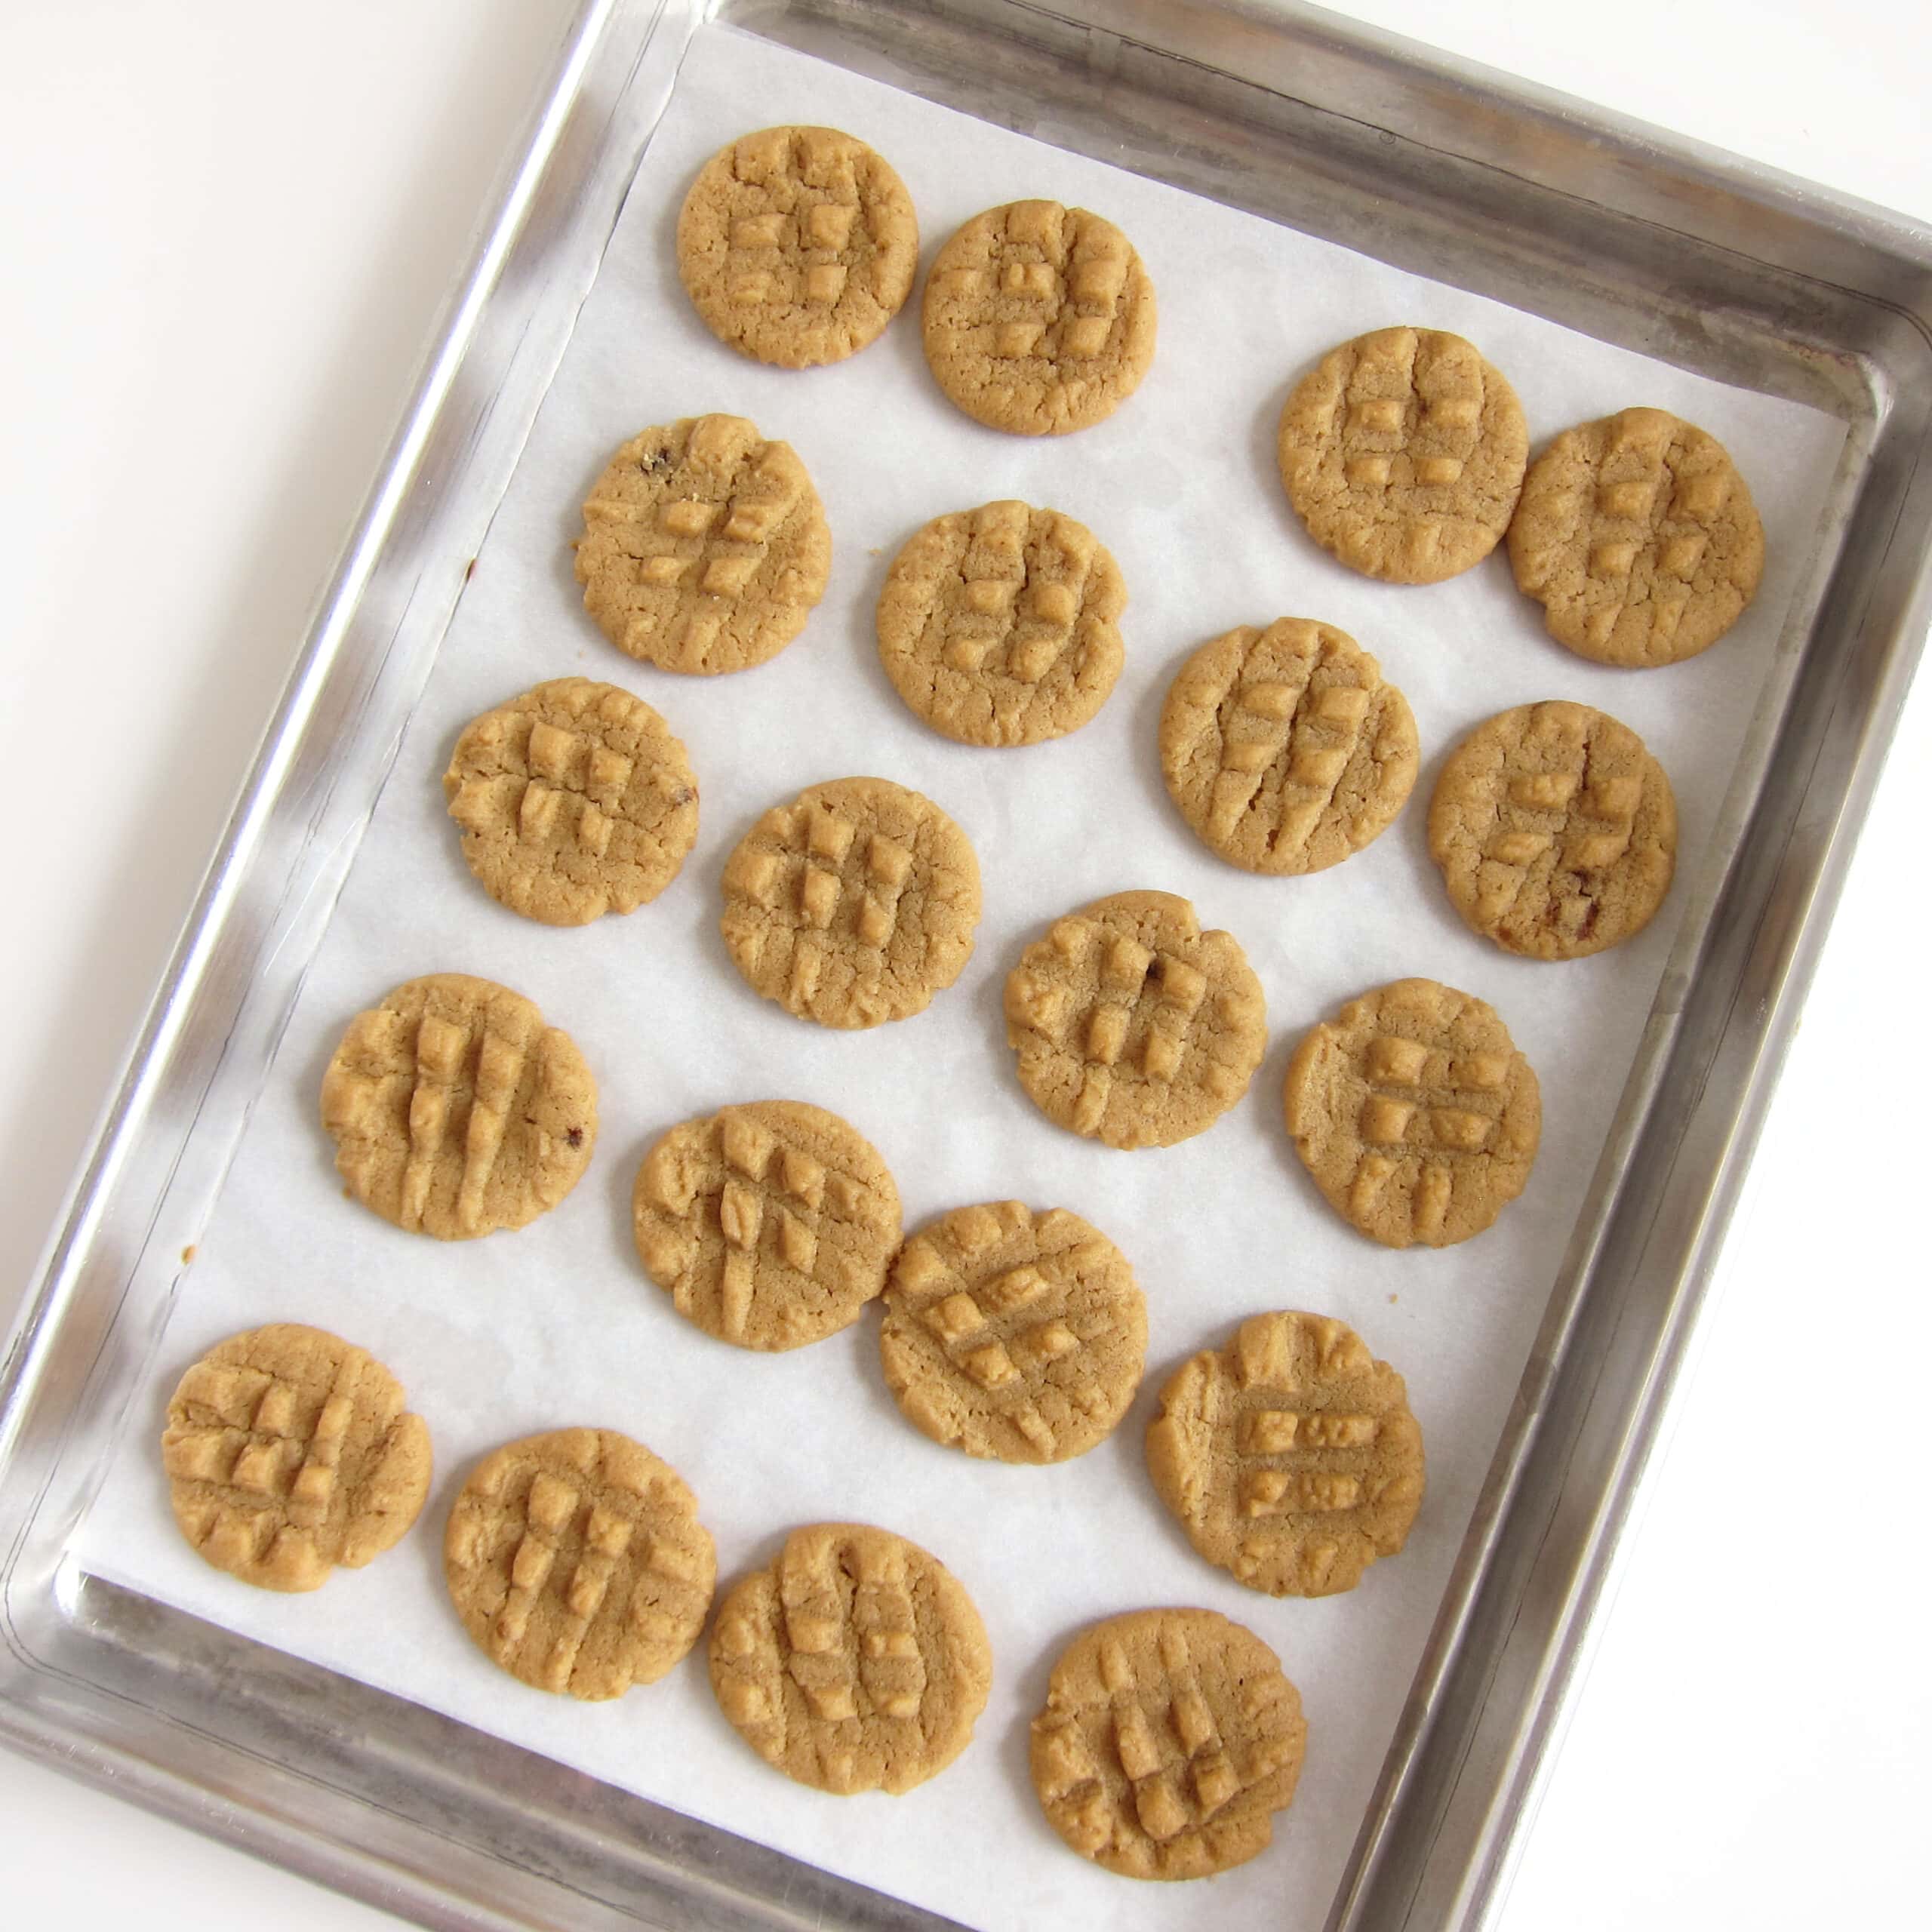 Baked mini peanut butter cookies.